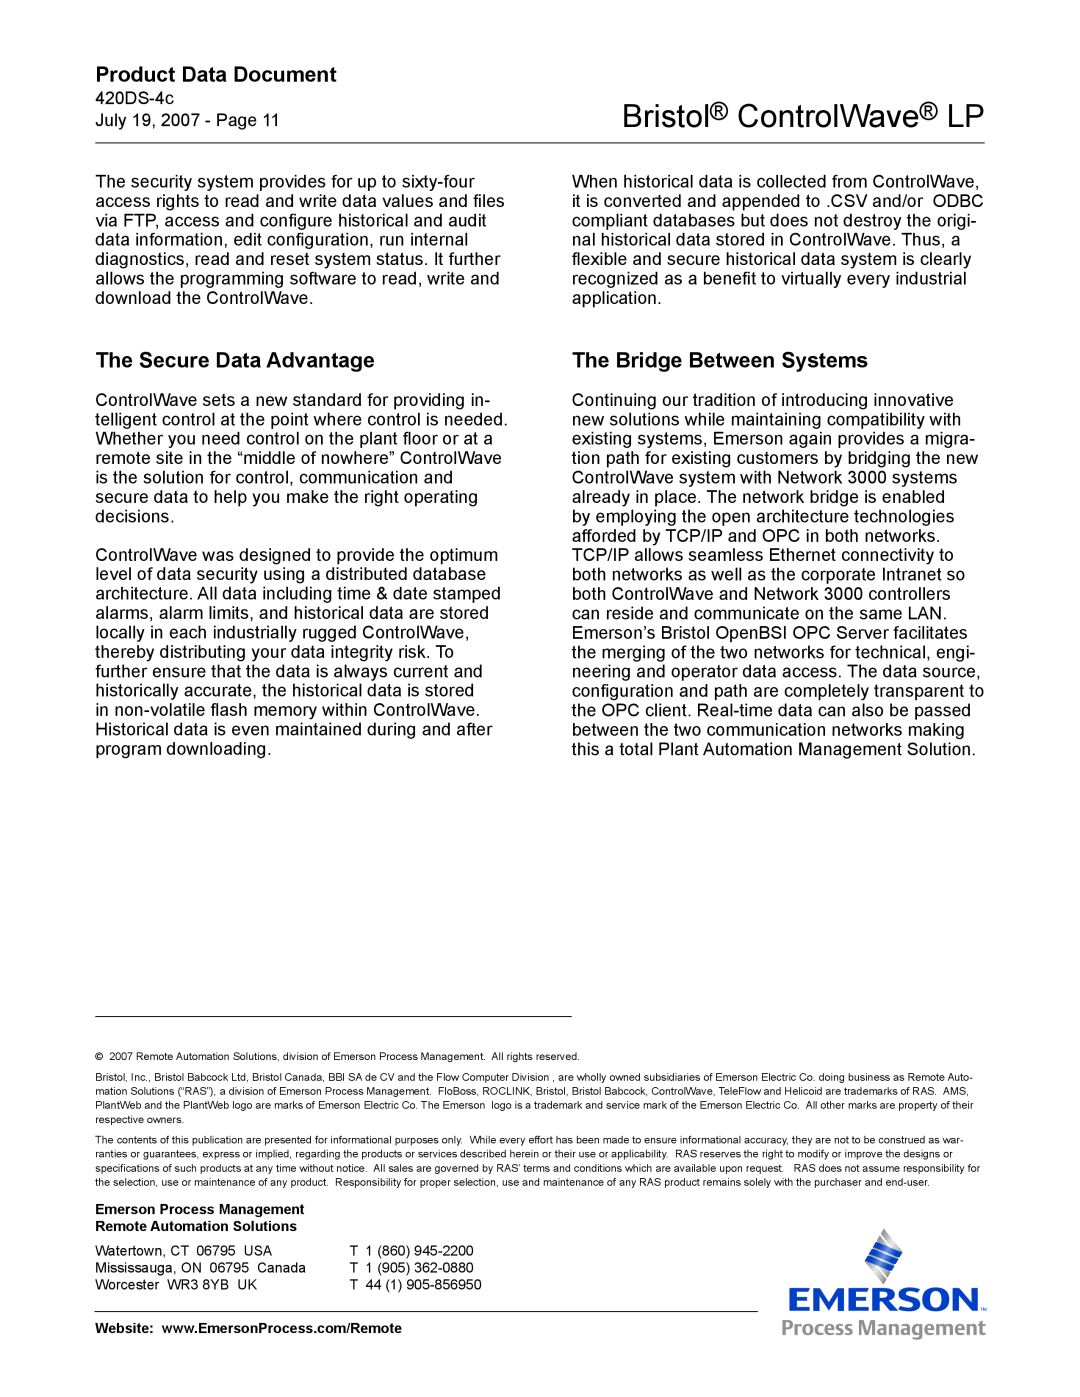 Emerson Process Management manual The Secure Data Advantage, The Bridge Between Systems, Bristol ControlWave LP 